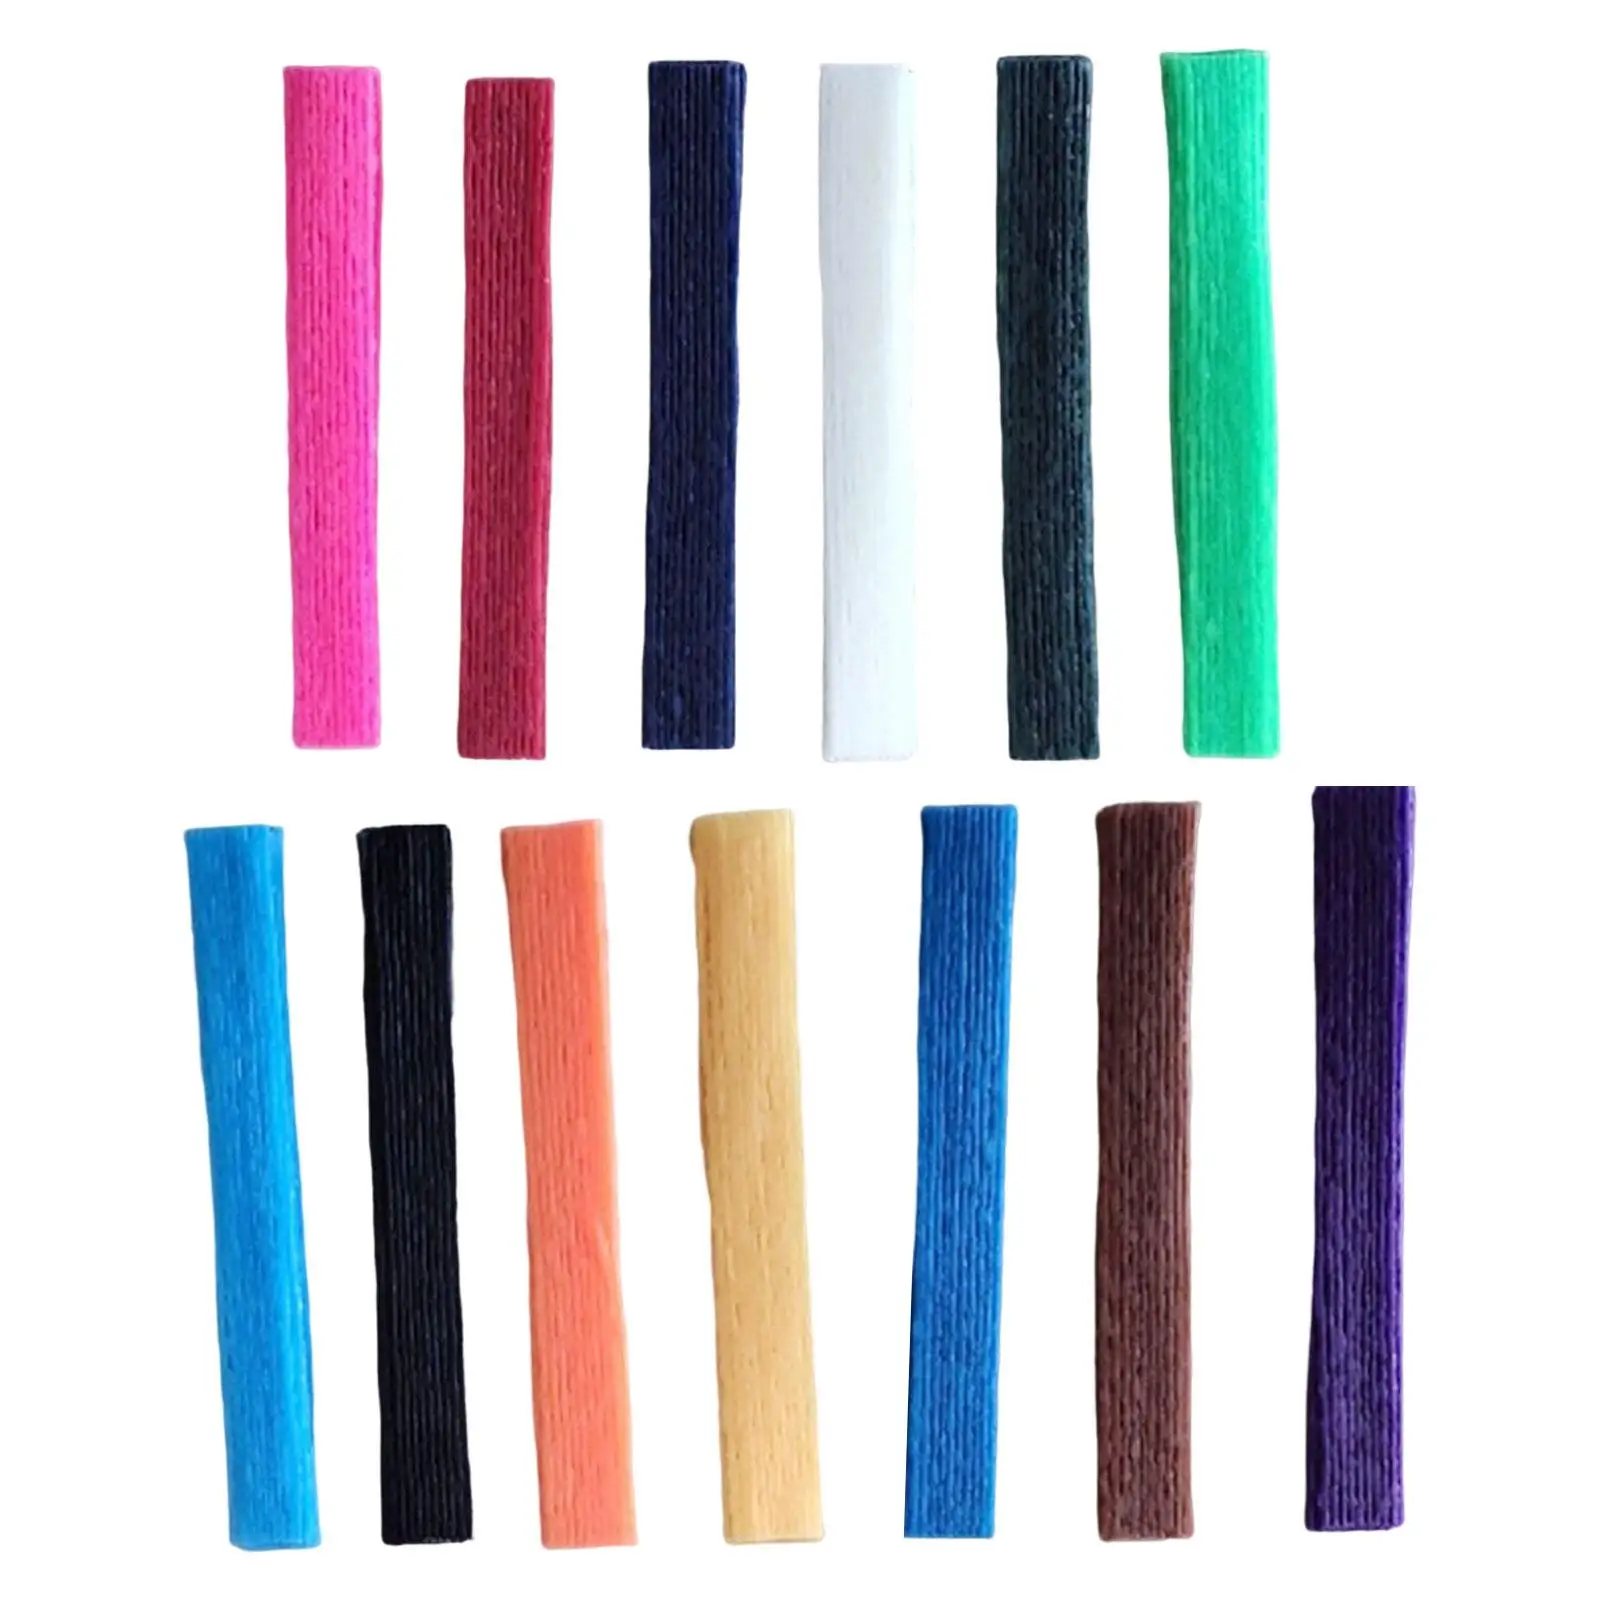 520 Pieces Wax Craft Sticks for Kids Reusable Molding Sculpting Sticks Sensory Fidget Toy for Boys Girls DIY Arts Activity Home